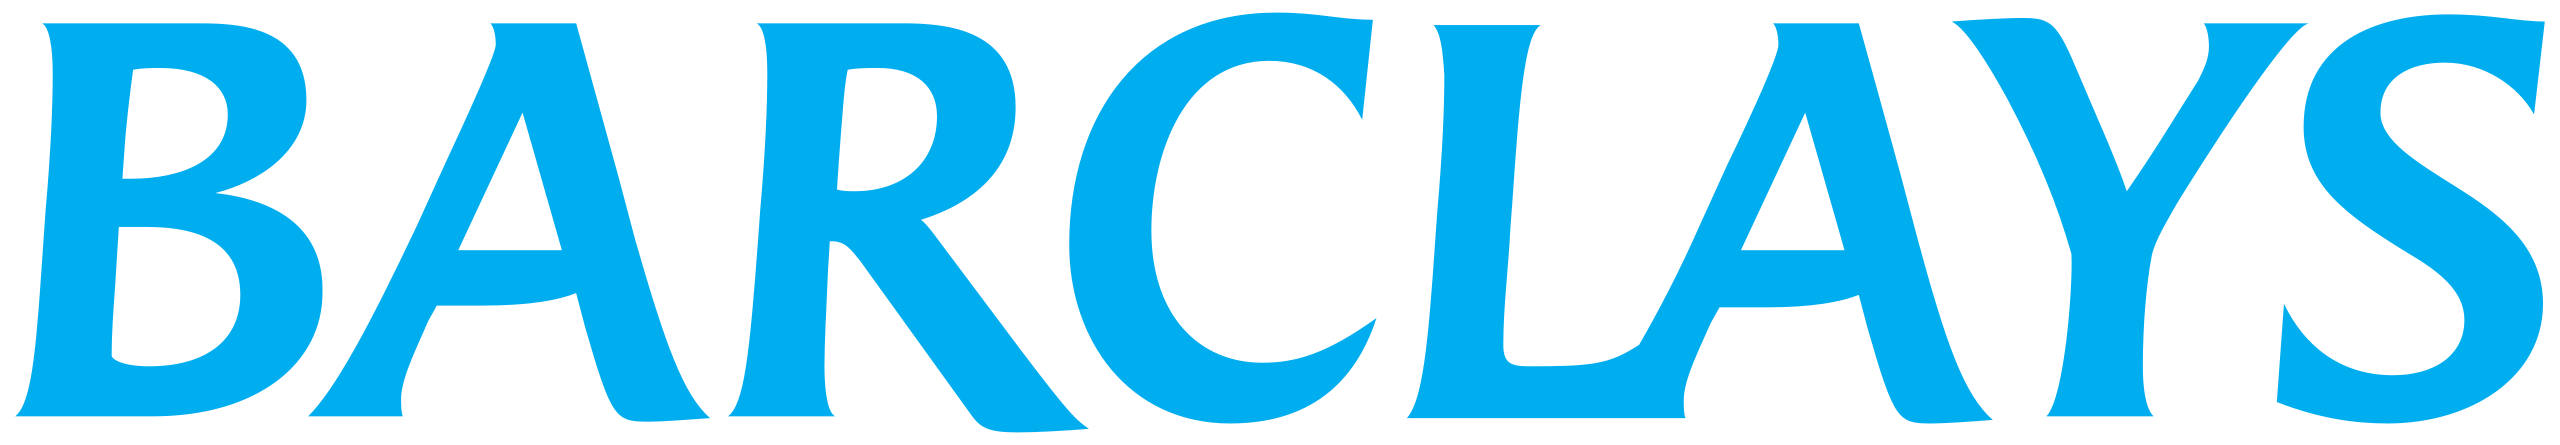 barclays logo vector